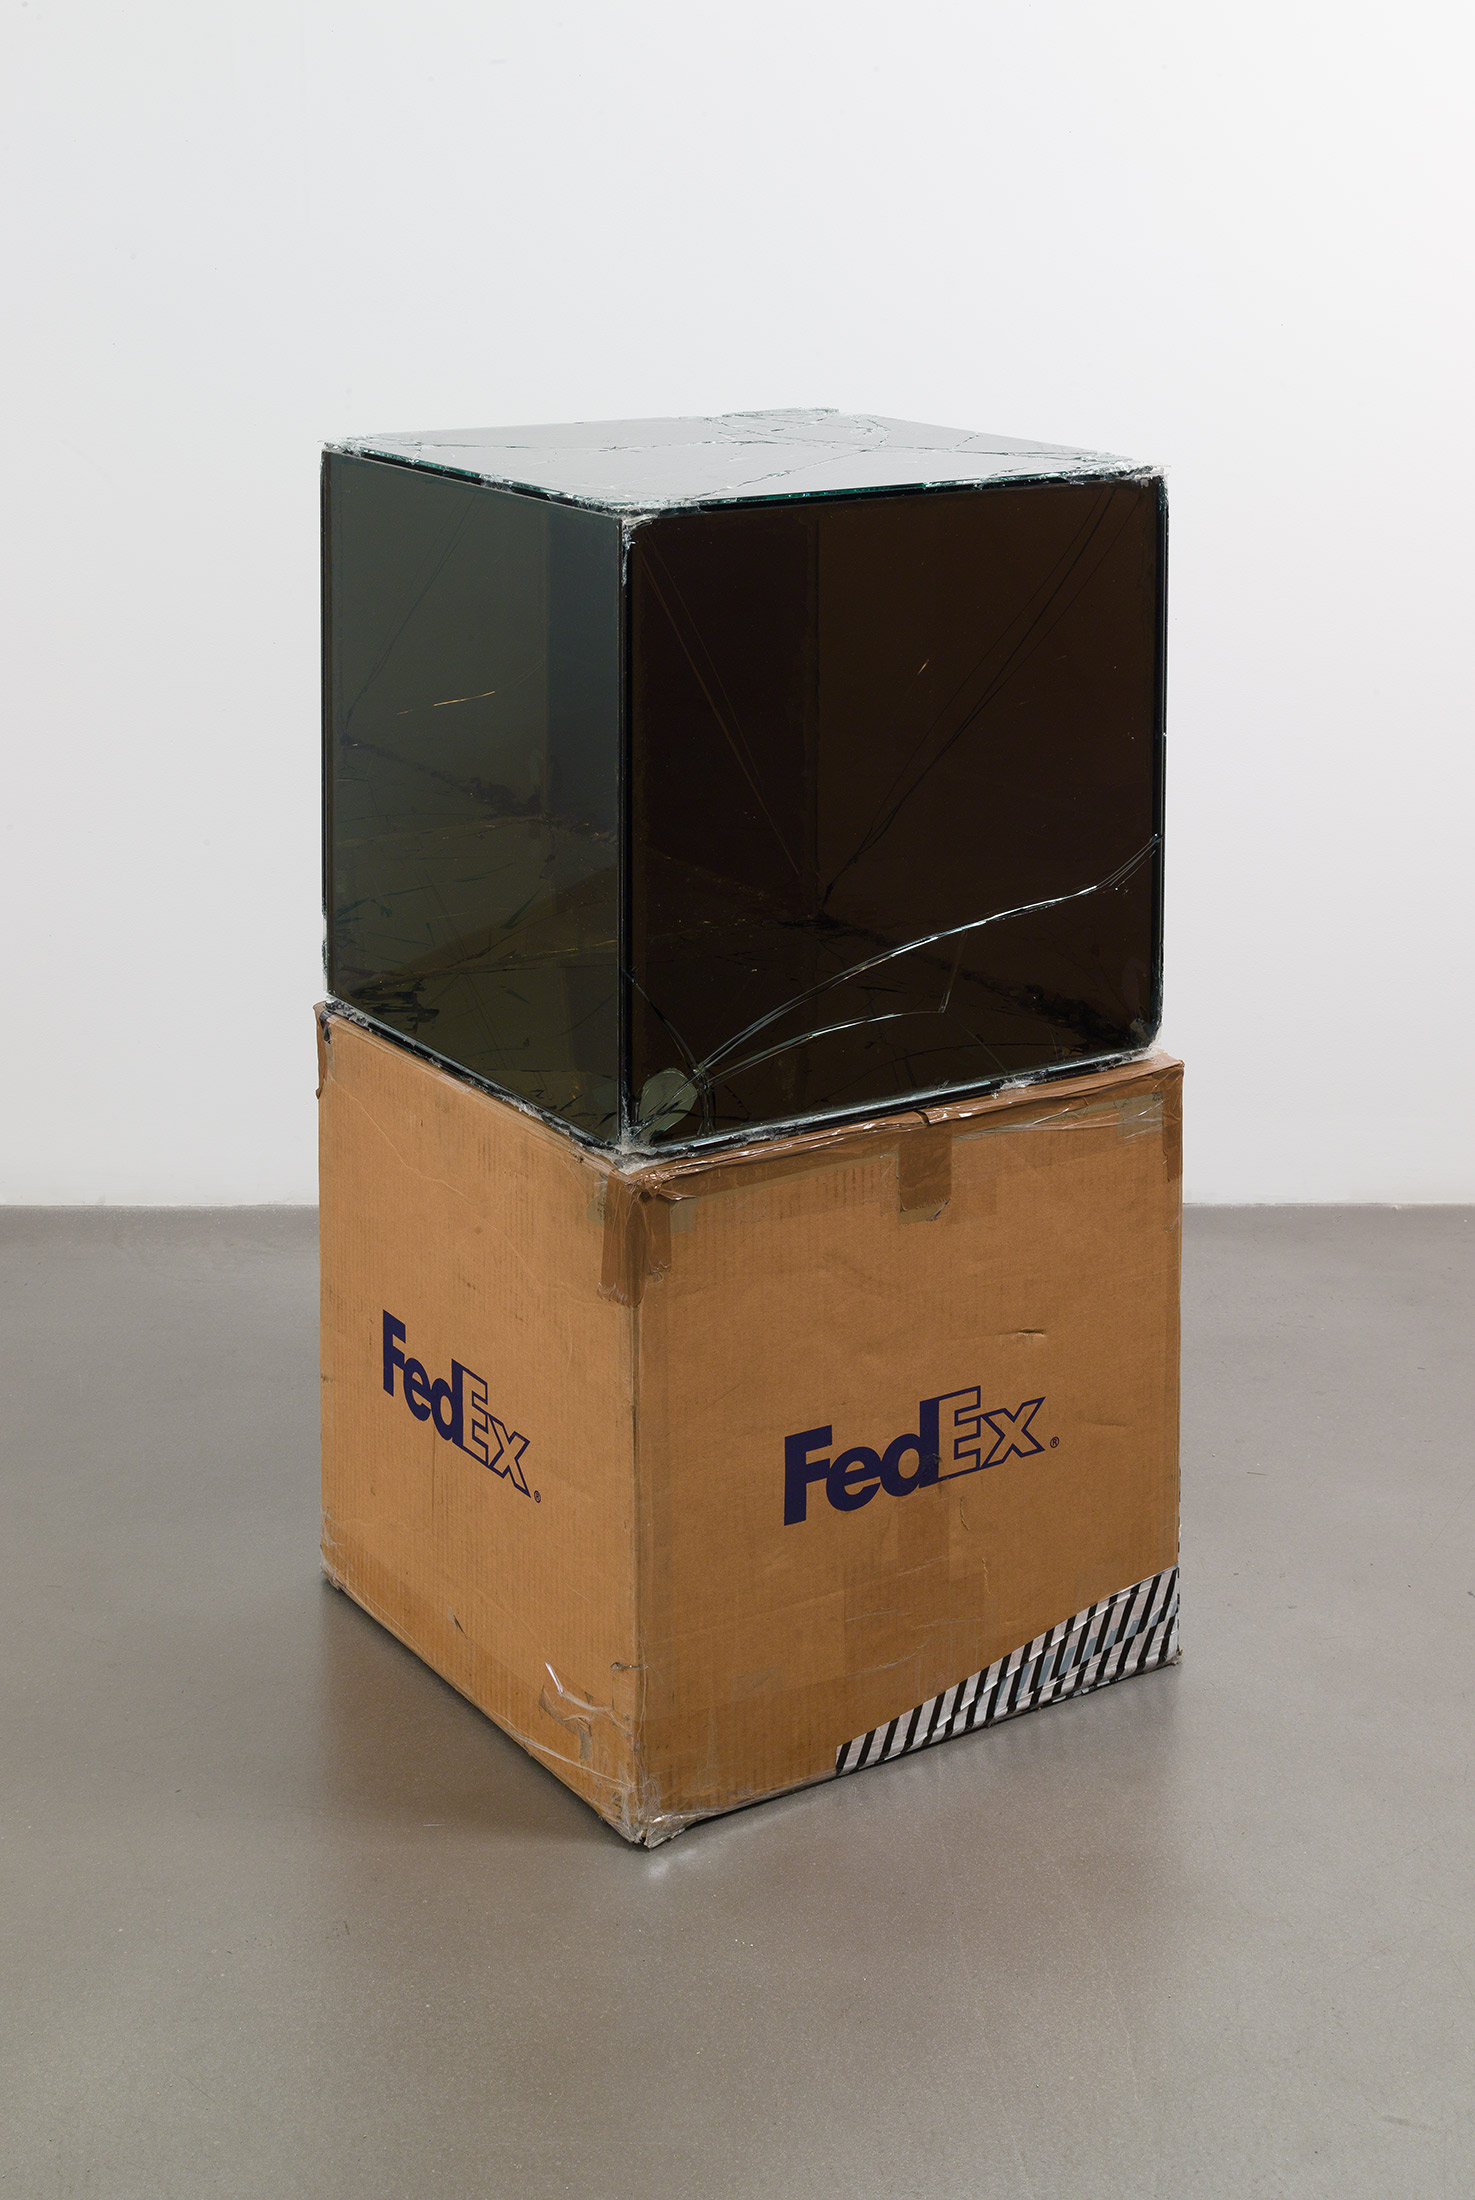   FedEx® Large Kraft Box  © 2005 FEDEX 330508 REV 10/05 SSCC, Standard Overnight, Los Angeles–Oak Park trk#865344981196, September 17–18, 2008, Standard Overnight, Oak Park–Los Angeles trk#865326699753, March 12–13, 2009, Standard Overnight, Los Ange